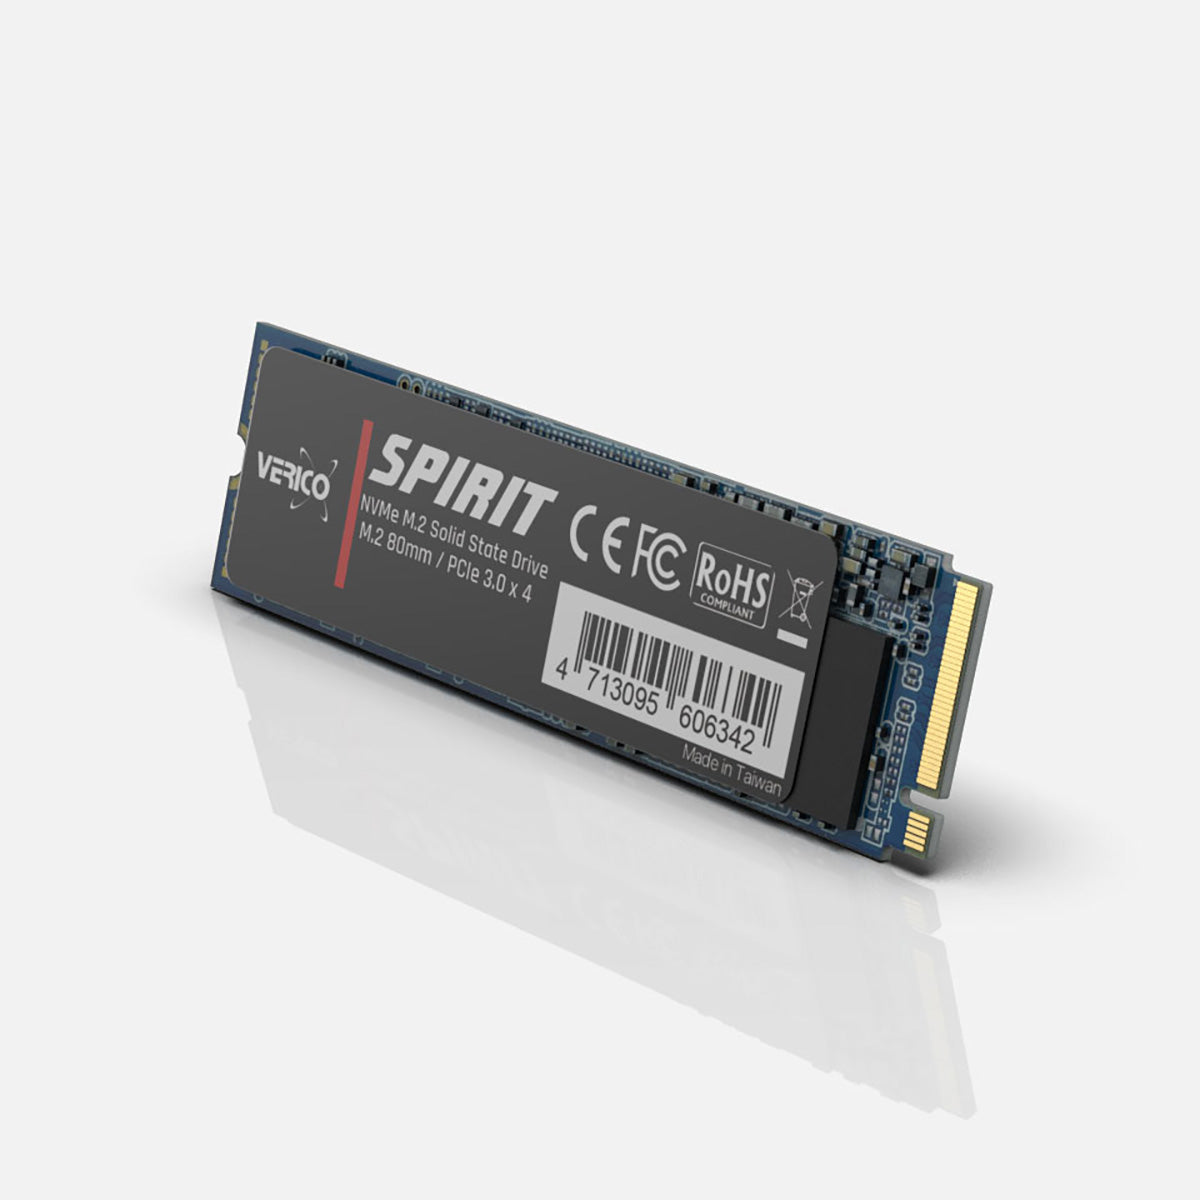 UNIDAD M.2 SSD VERICO (1SSOK-SSMM93-NN) SPIRIT 256GB, PCIE, NVME, 2280, 3DNAND